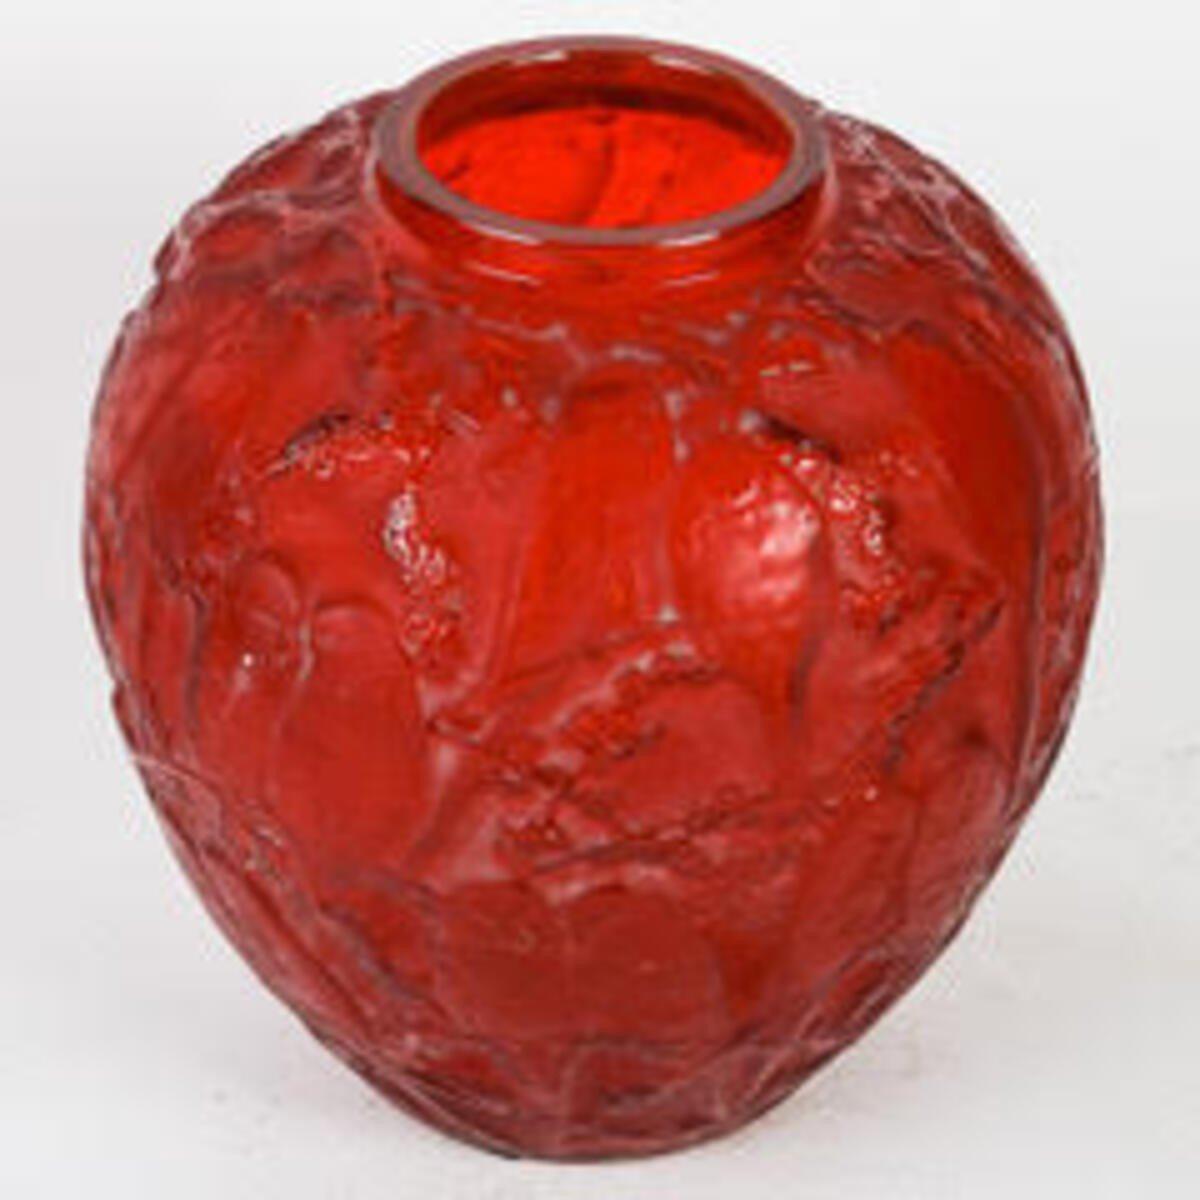 Rene Lalique (1860-1945).
Vase 